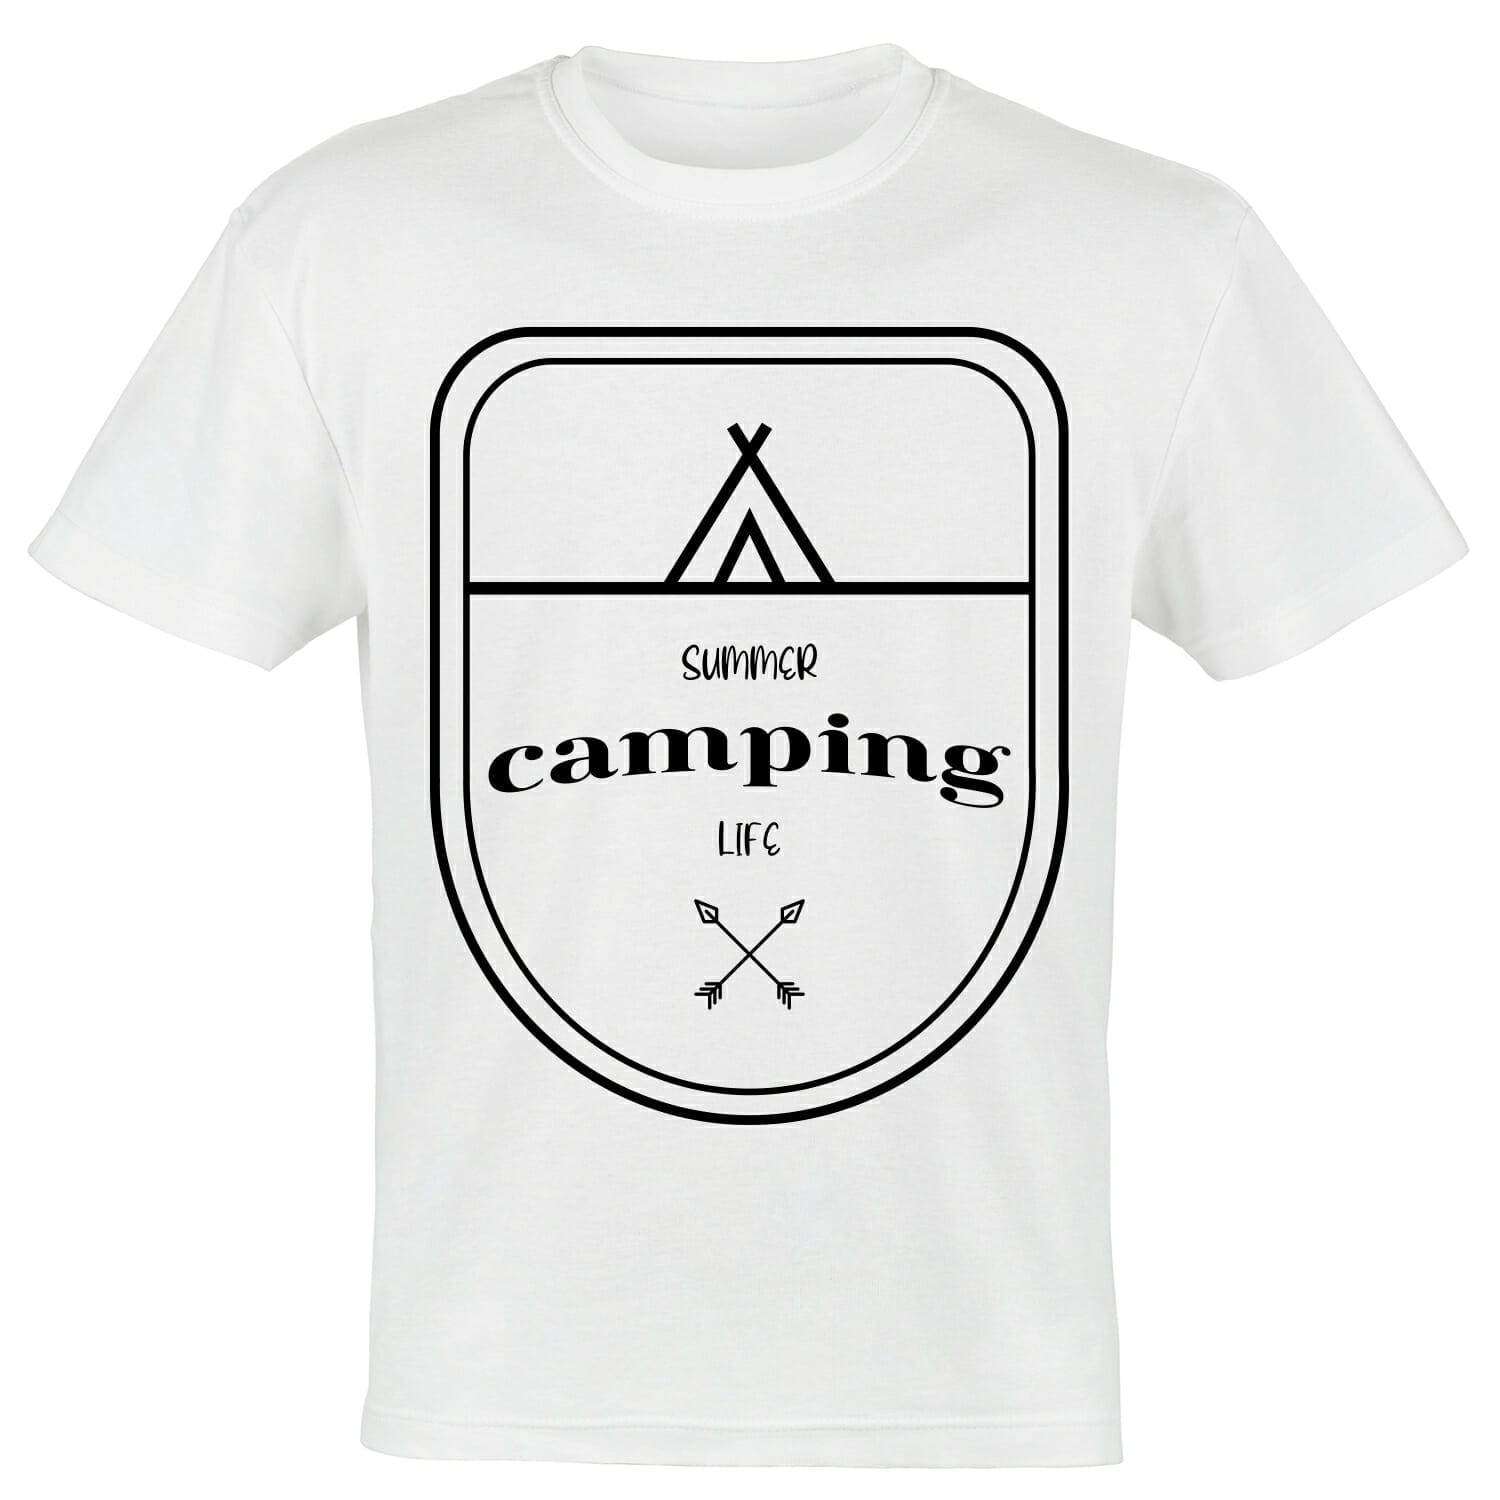 SUMMER-camping-LIFE-tshirt-desing